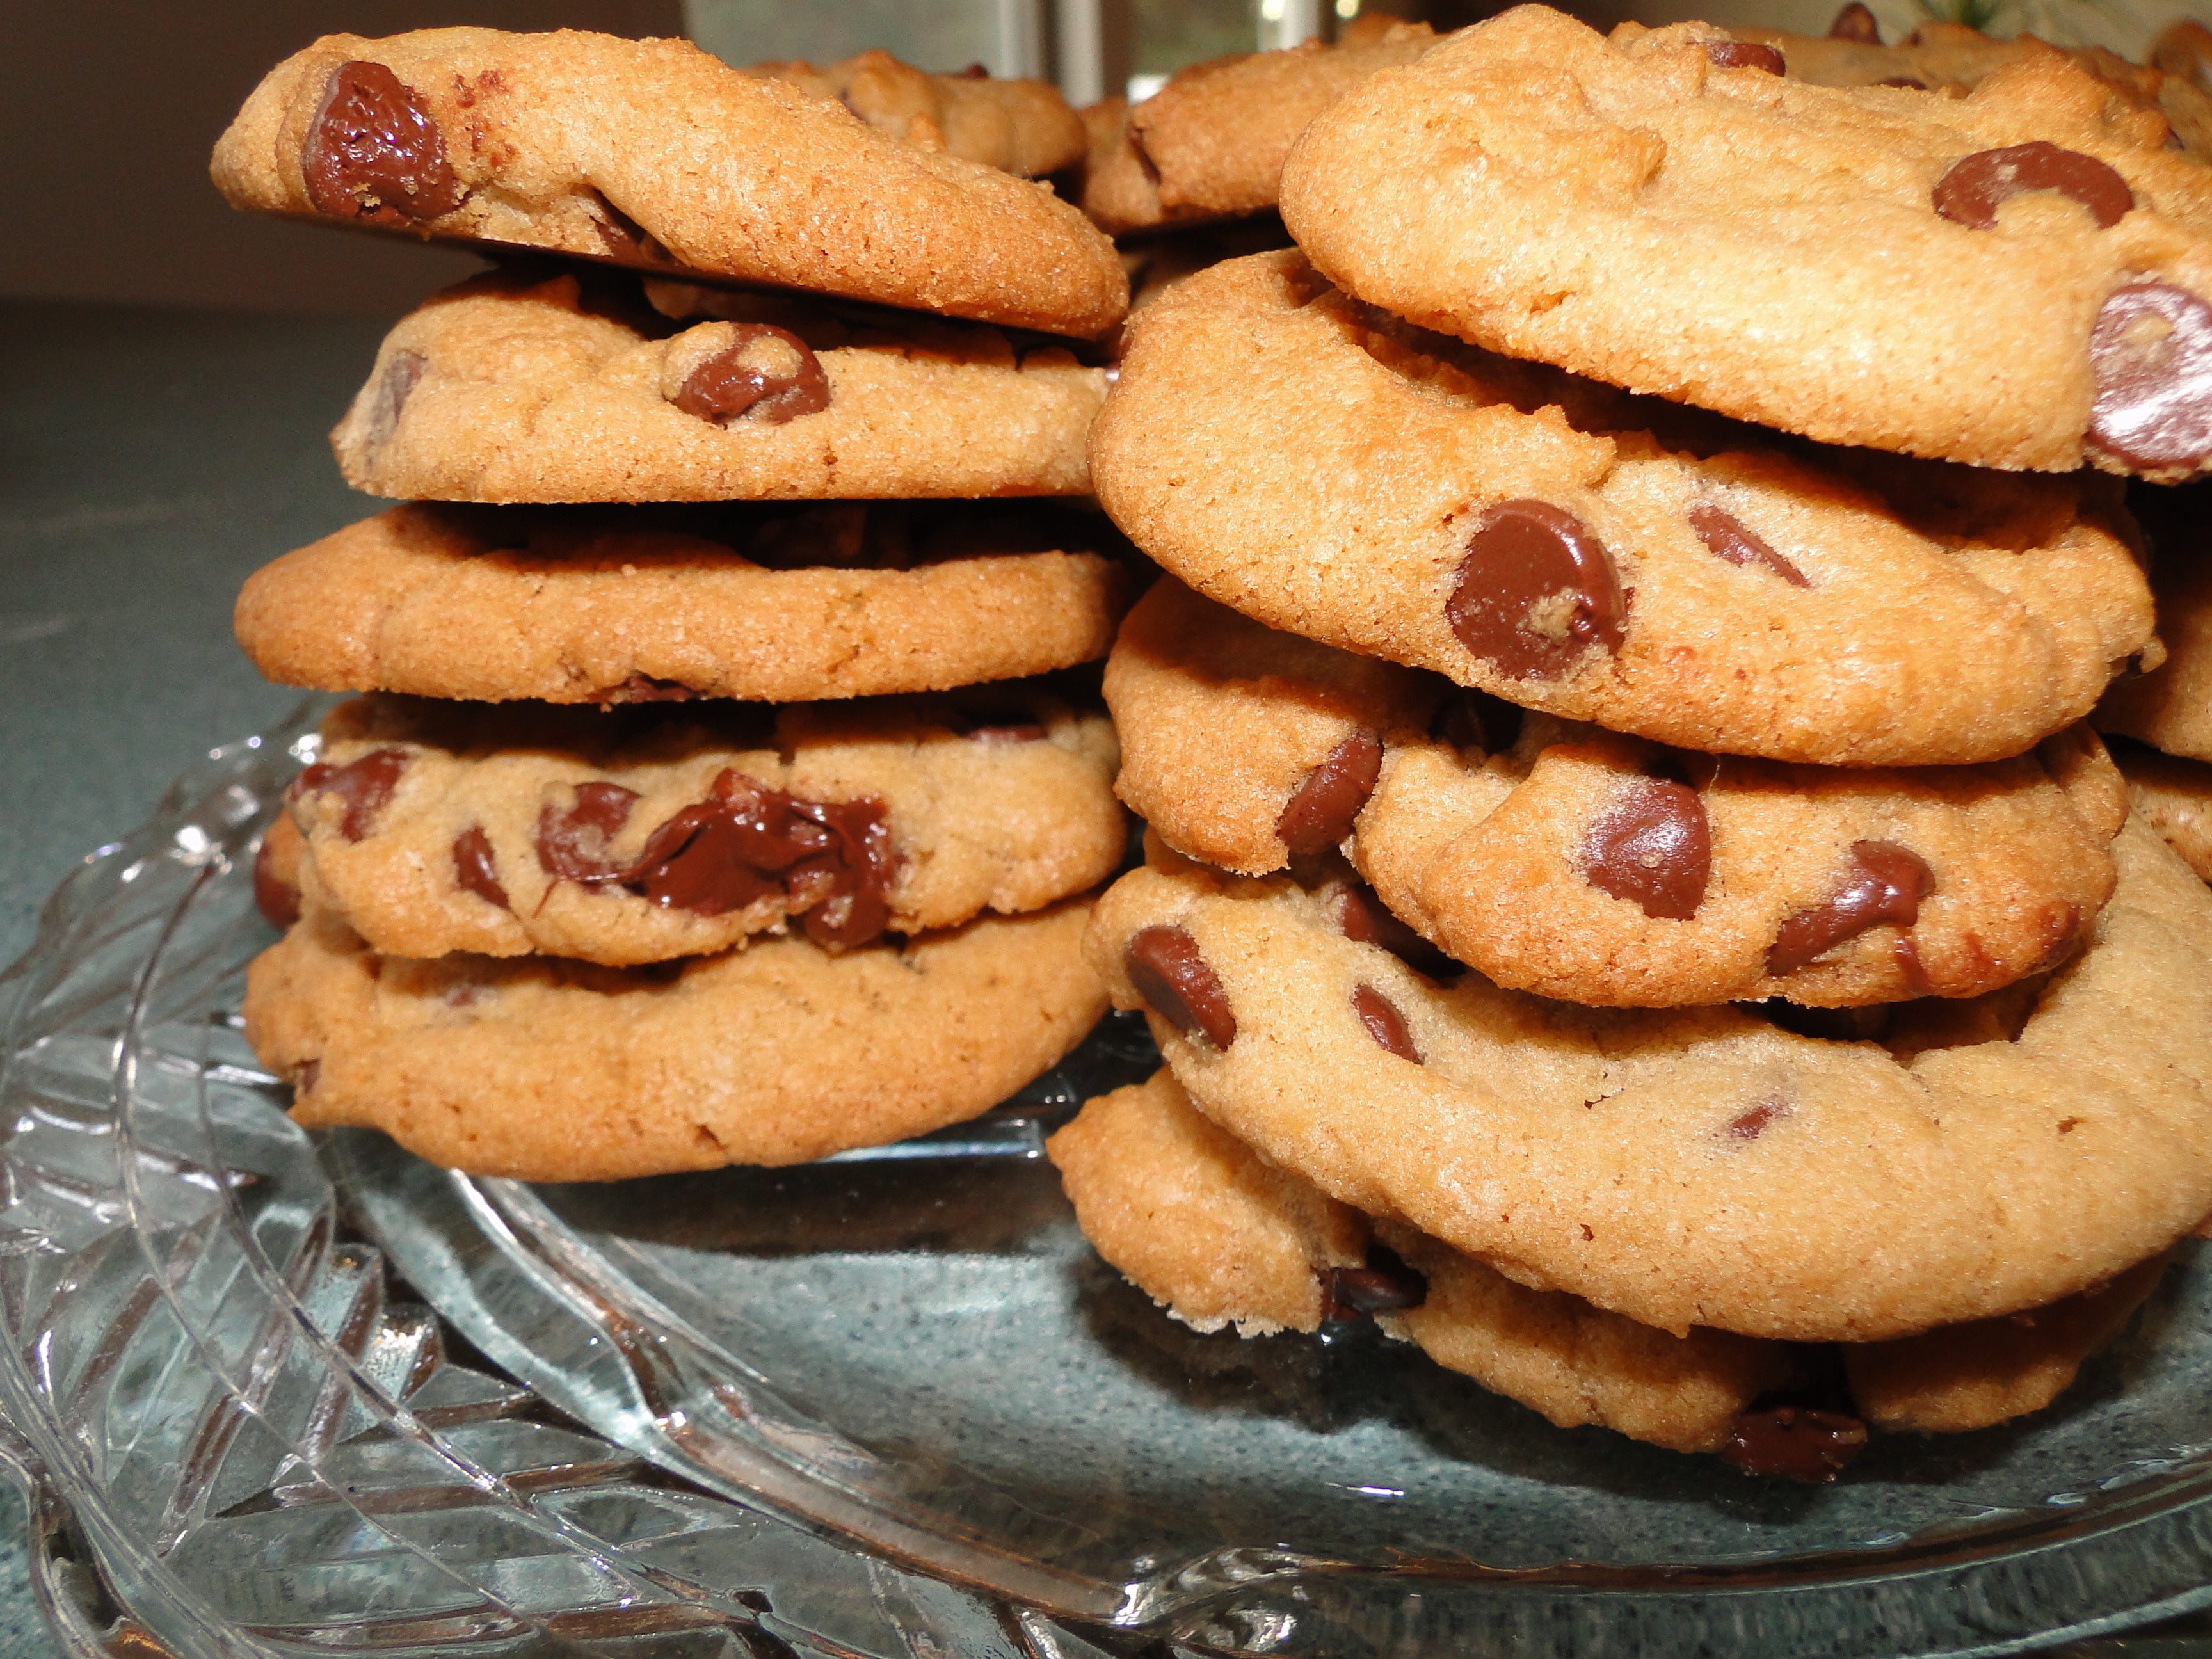 baked chocolate cookies